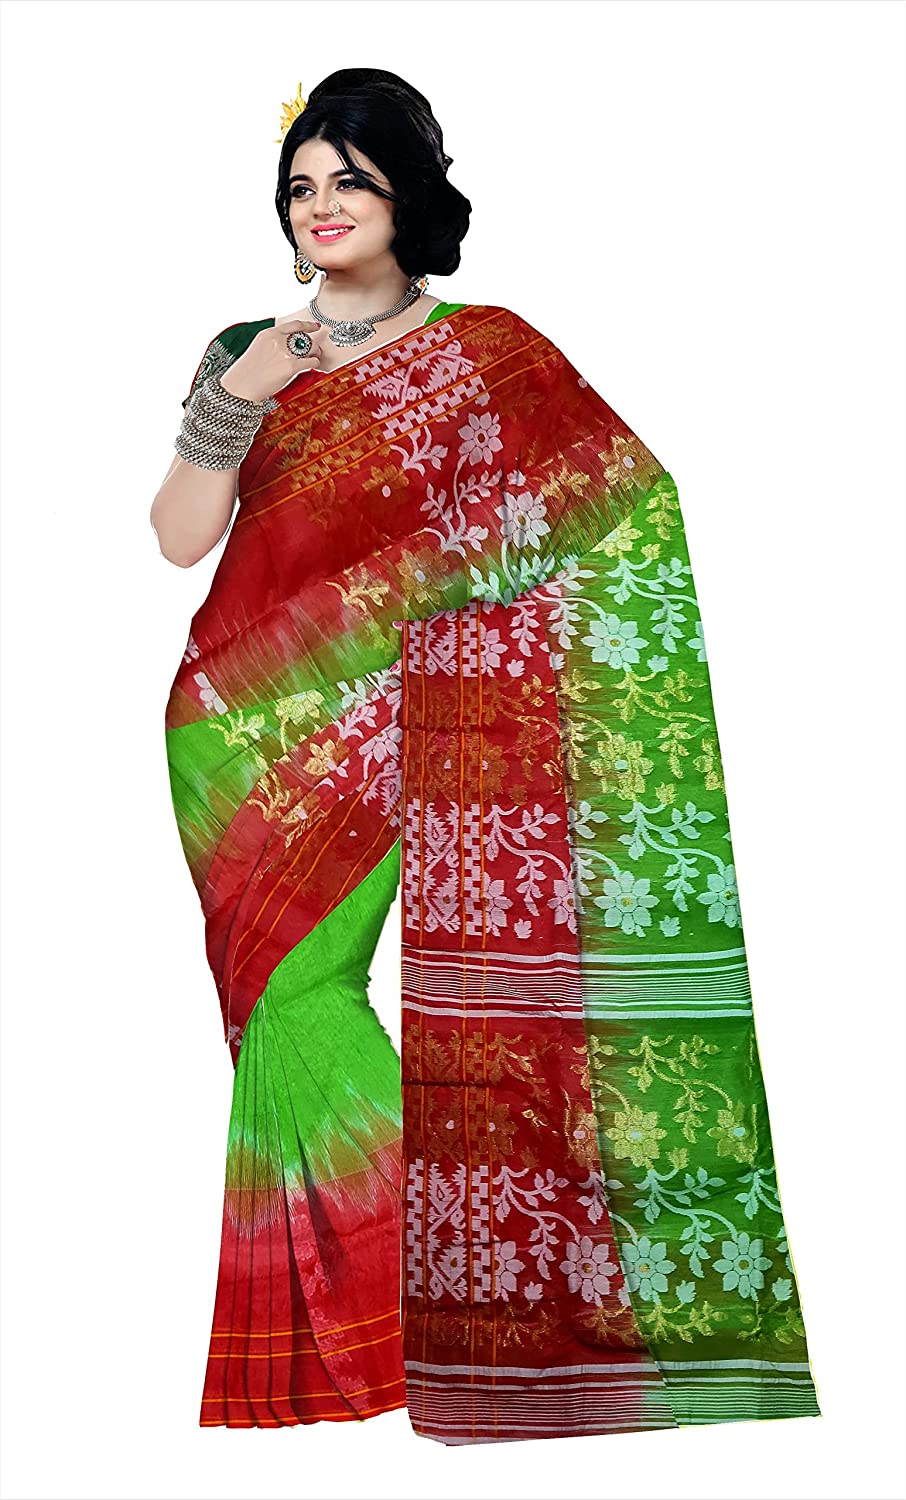 Pradip Fabrics Ethnic Women's Cotton Tant Gap Jamdani Red and Green Color Saree